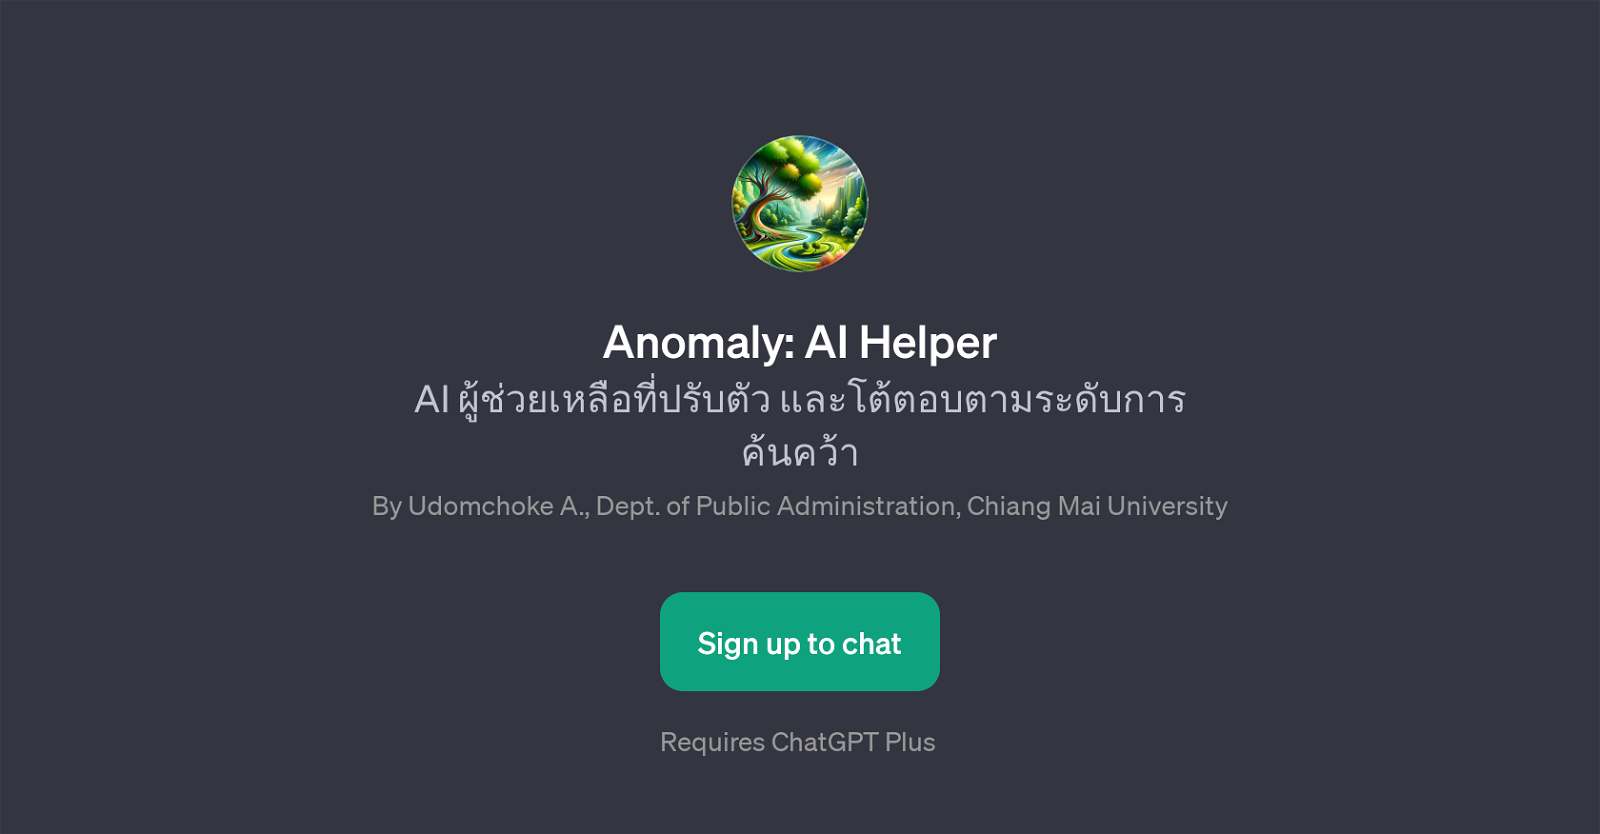 Anomaly: AI Helper website